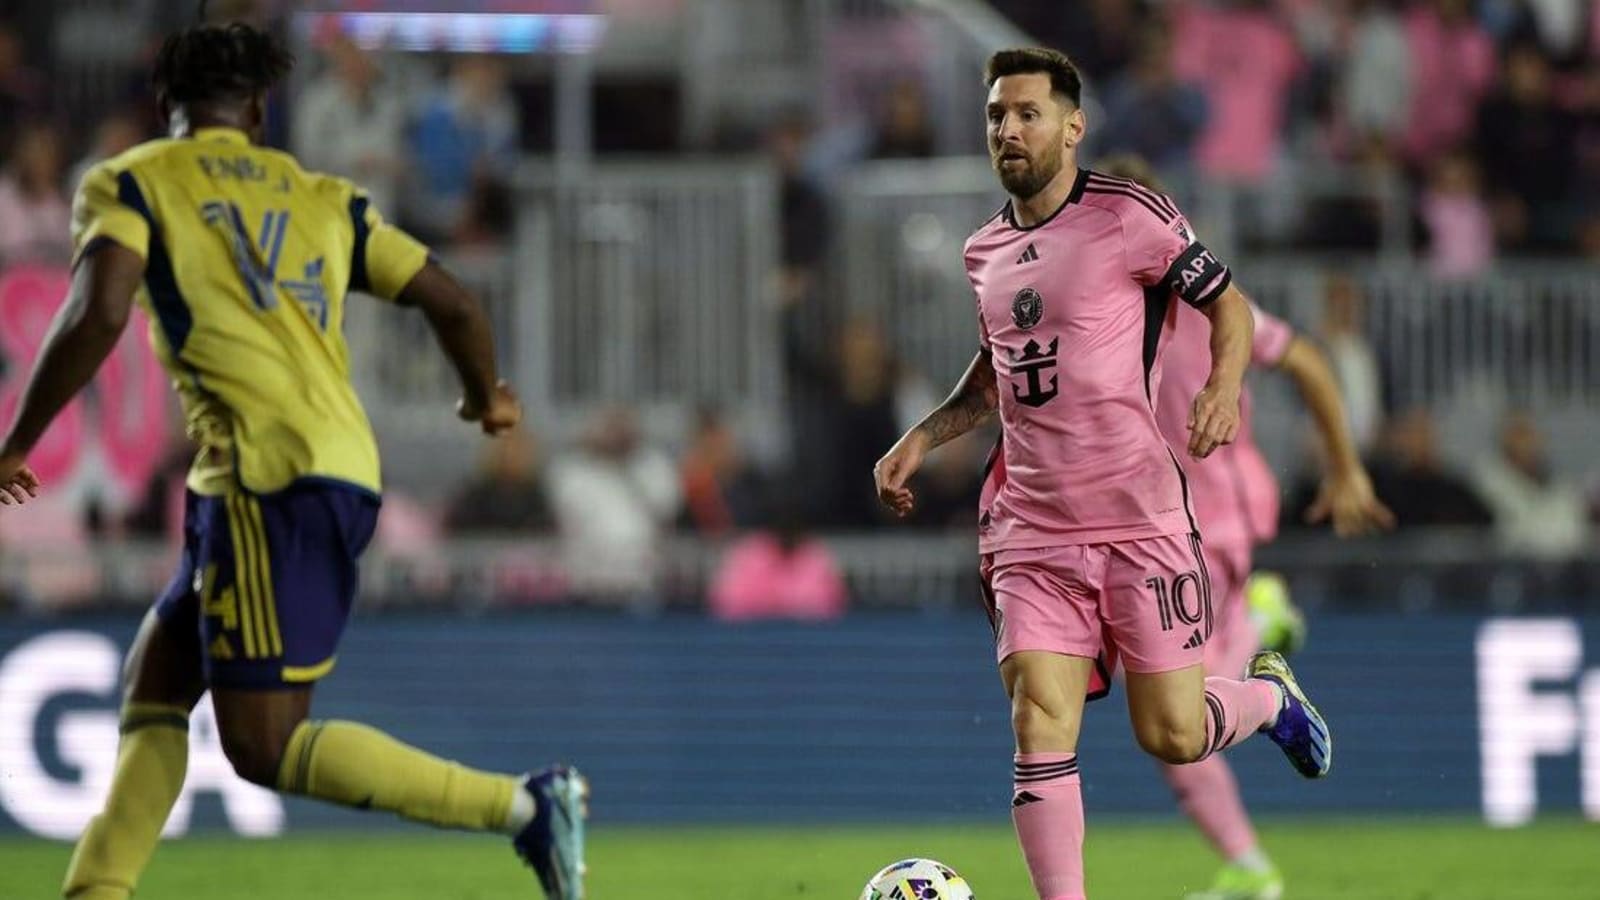 Lionel Messi steers Inter Miami past RSL in opener